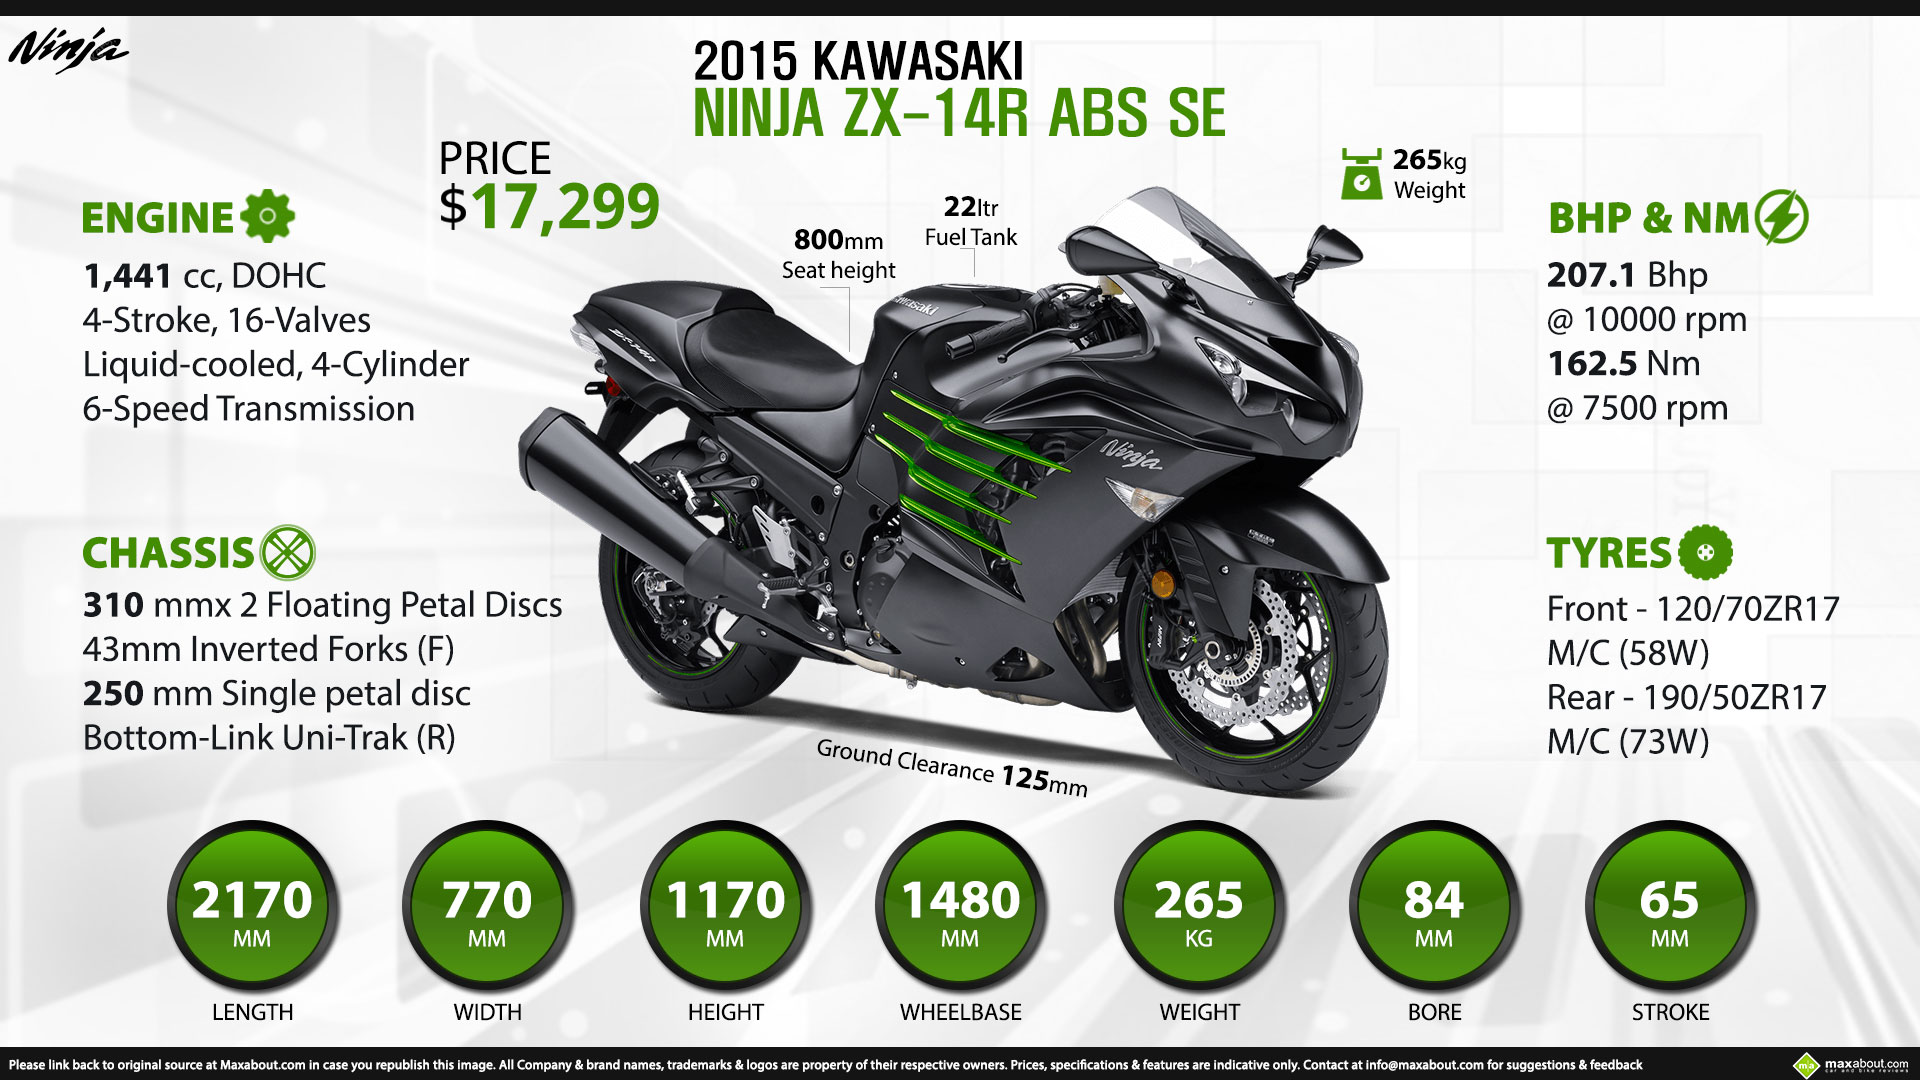 Quick Facts - 2015 Kawasaki Ninja ZX-14R ABS SE